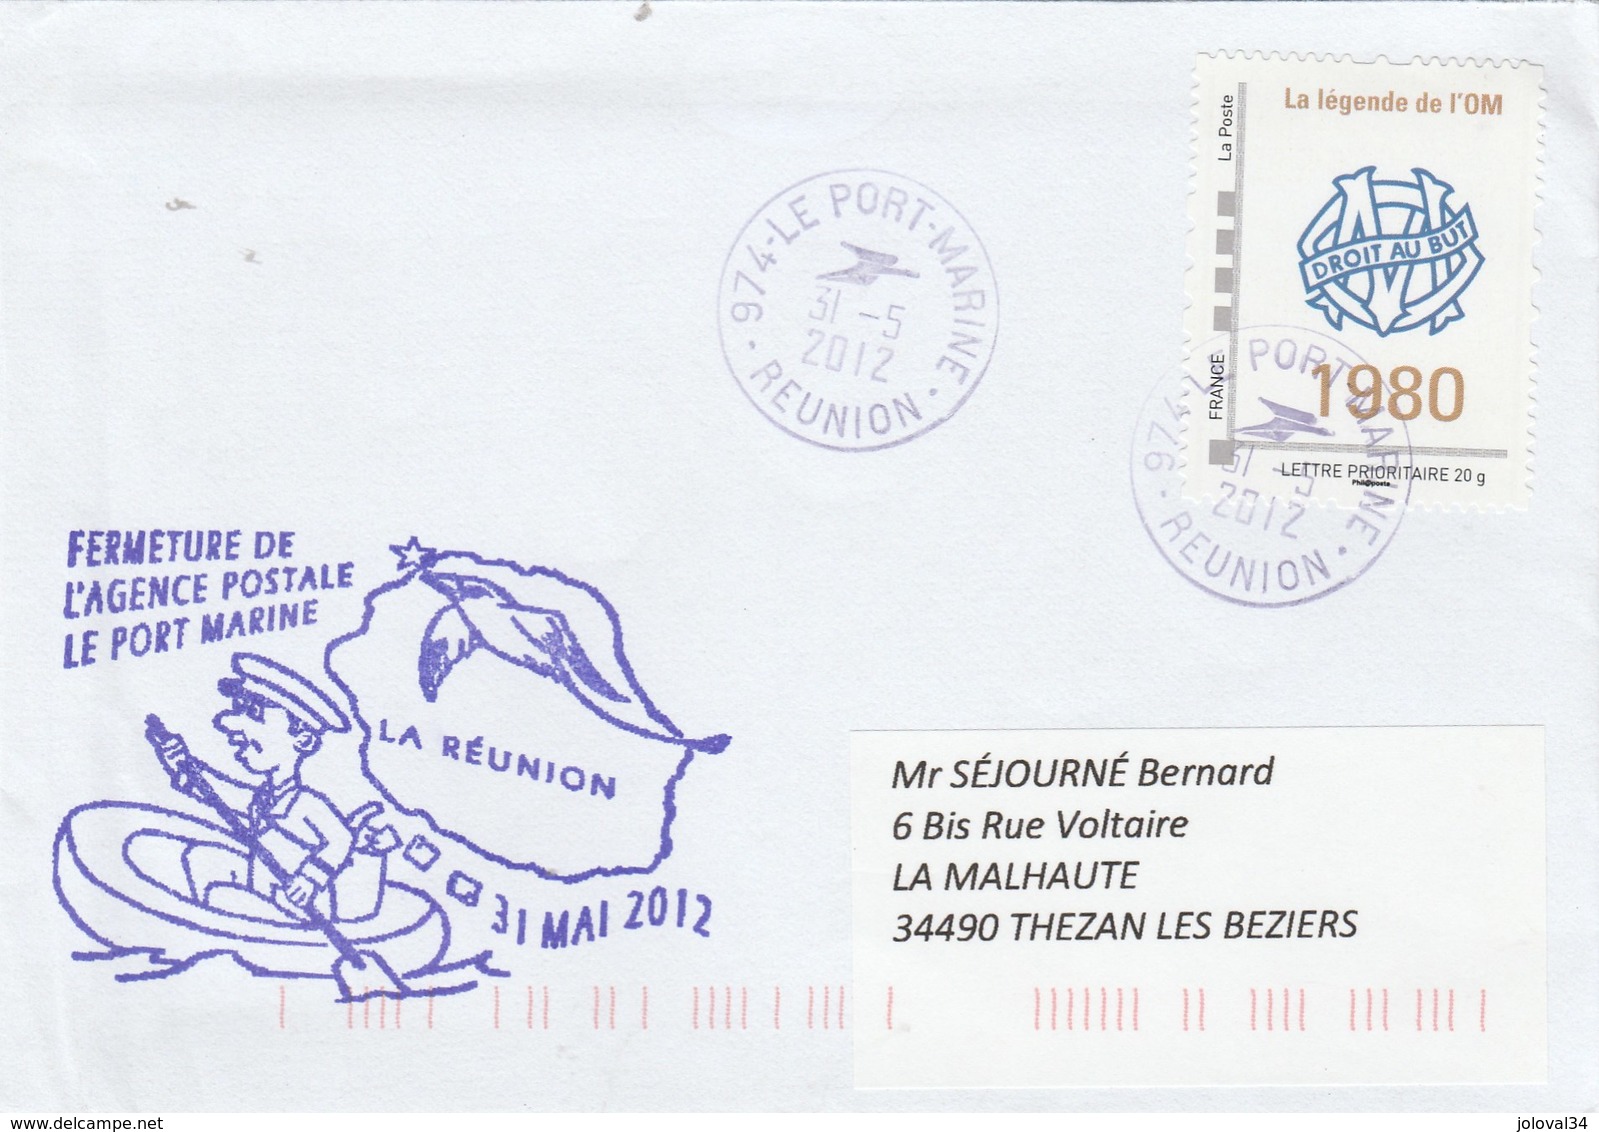 Fermeture Agence Postale LE PORT MARINE  Réunion 31/5/2012 Avec MonTimbraMoi Légende De L' OM 1980 Marseille Football - Seepost